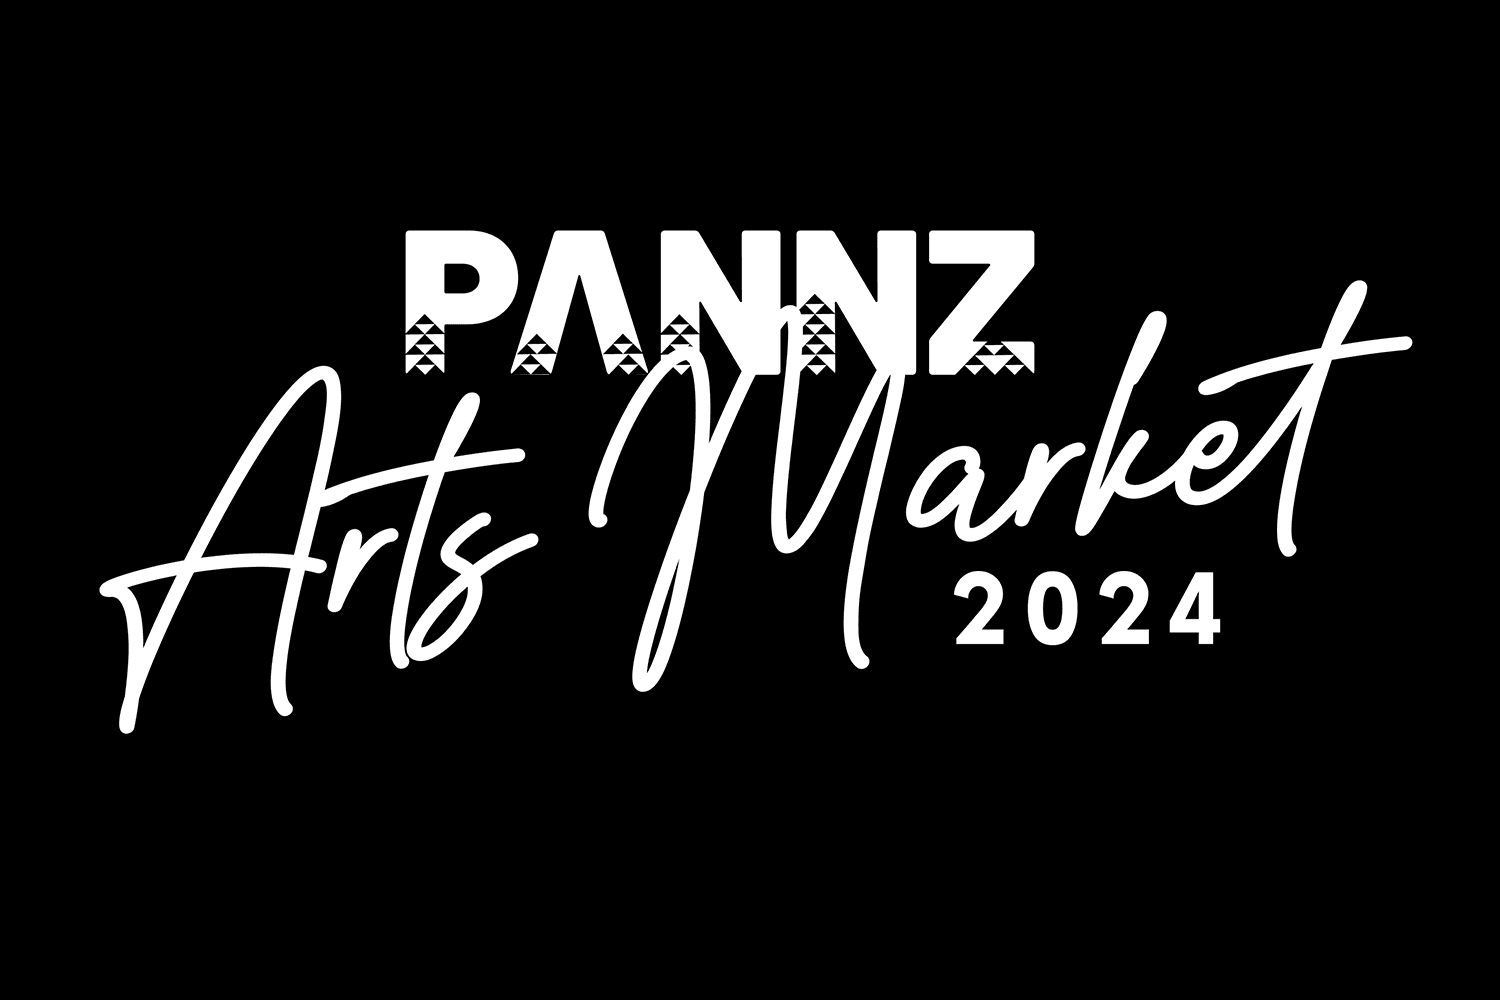 PANNZ Arts Market 2024 applications open 4 September The Big Idea